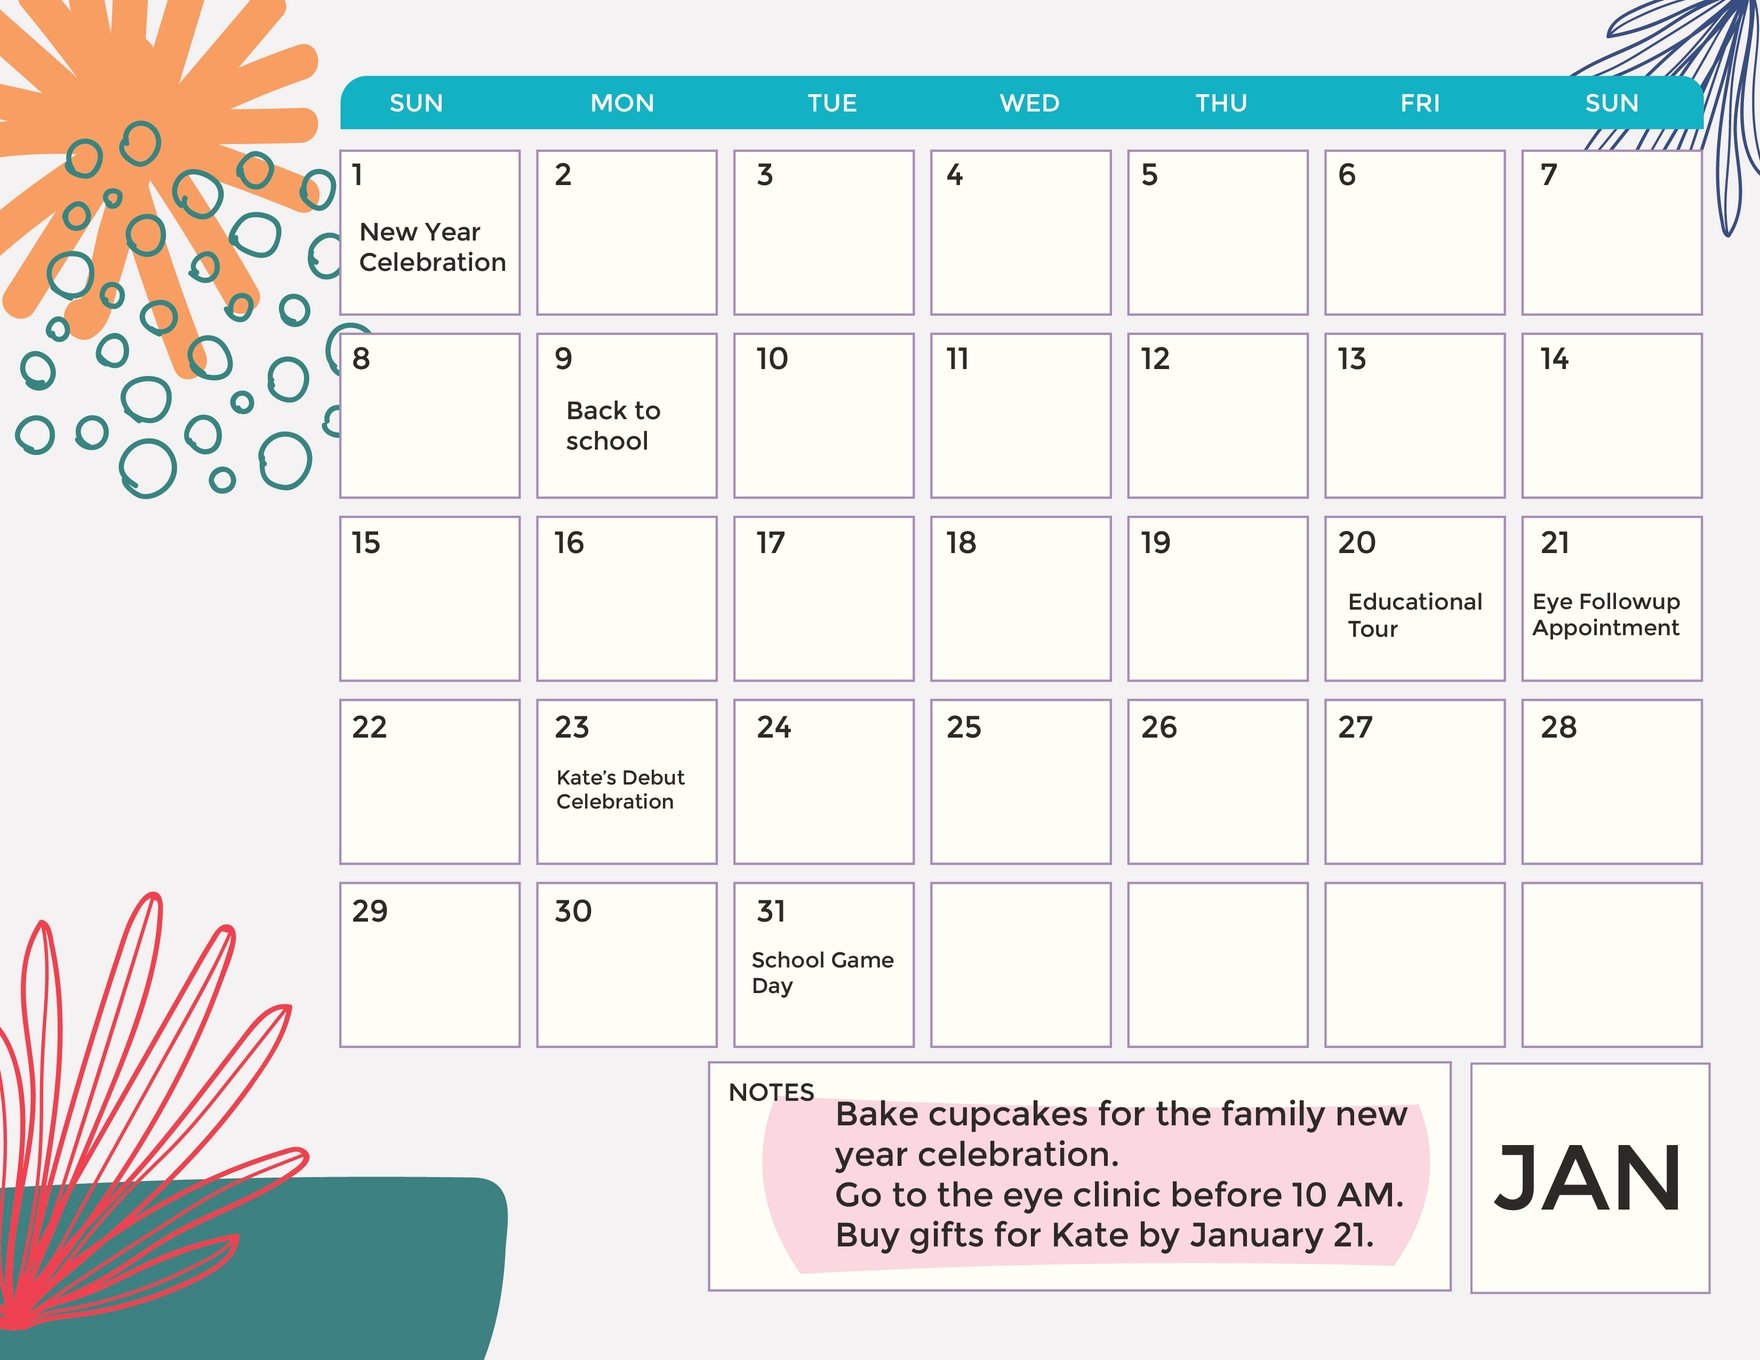 january-2023-editable-calendar-printable-template-calendar